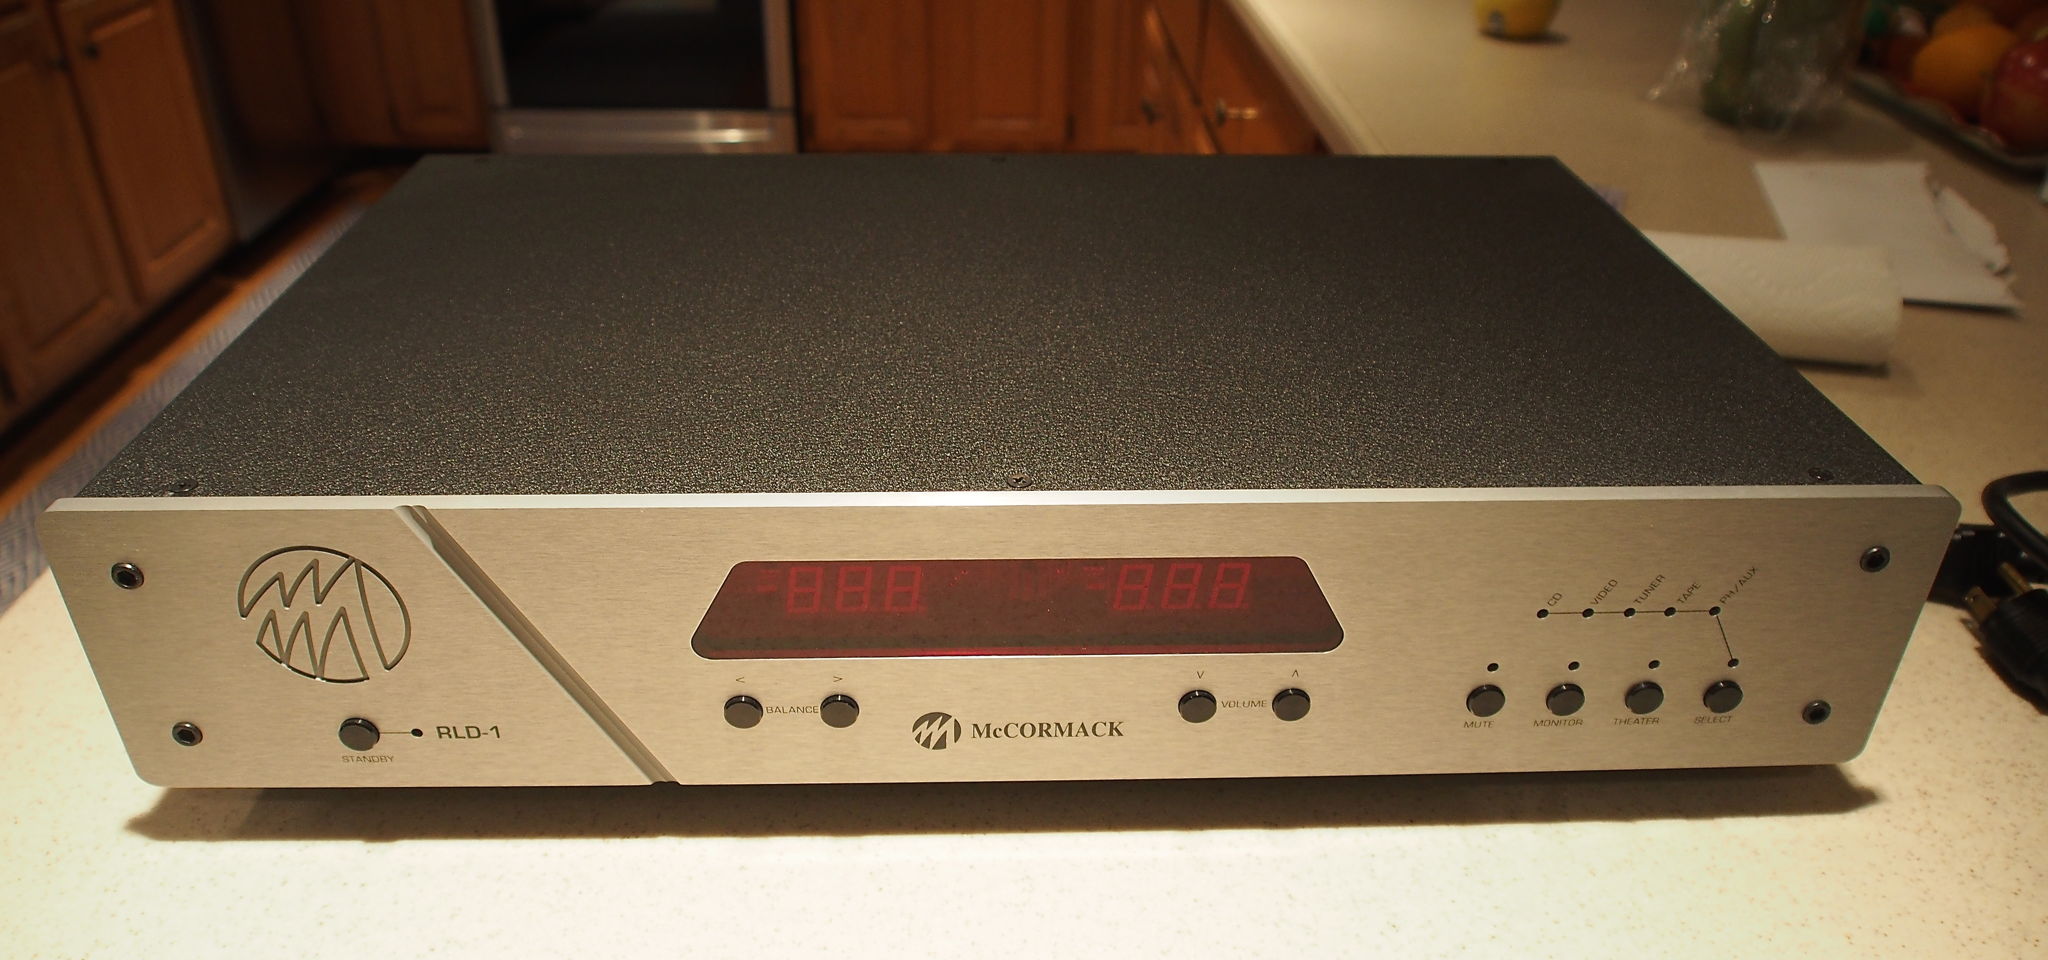 Mccormack Audio RLD-1 with phono